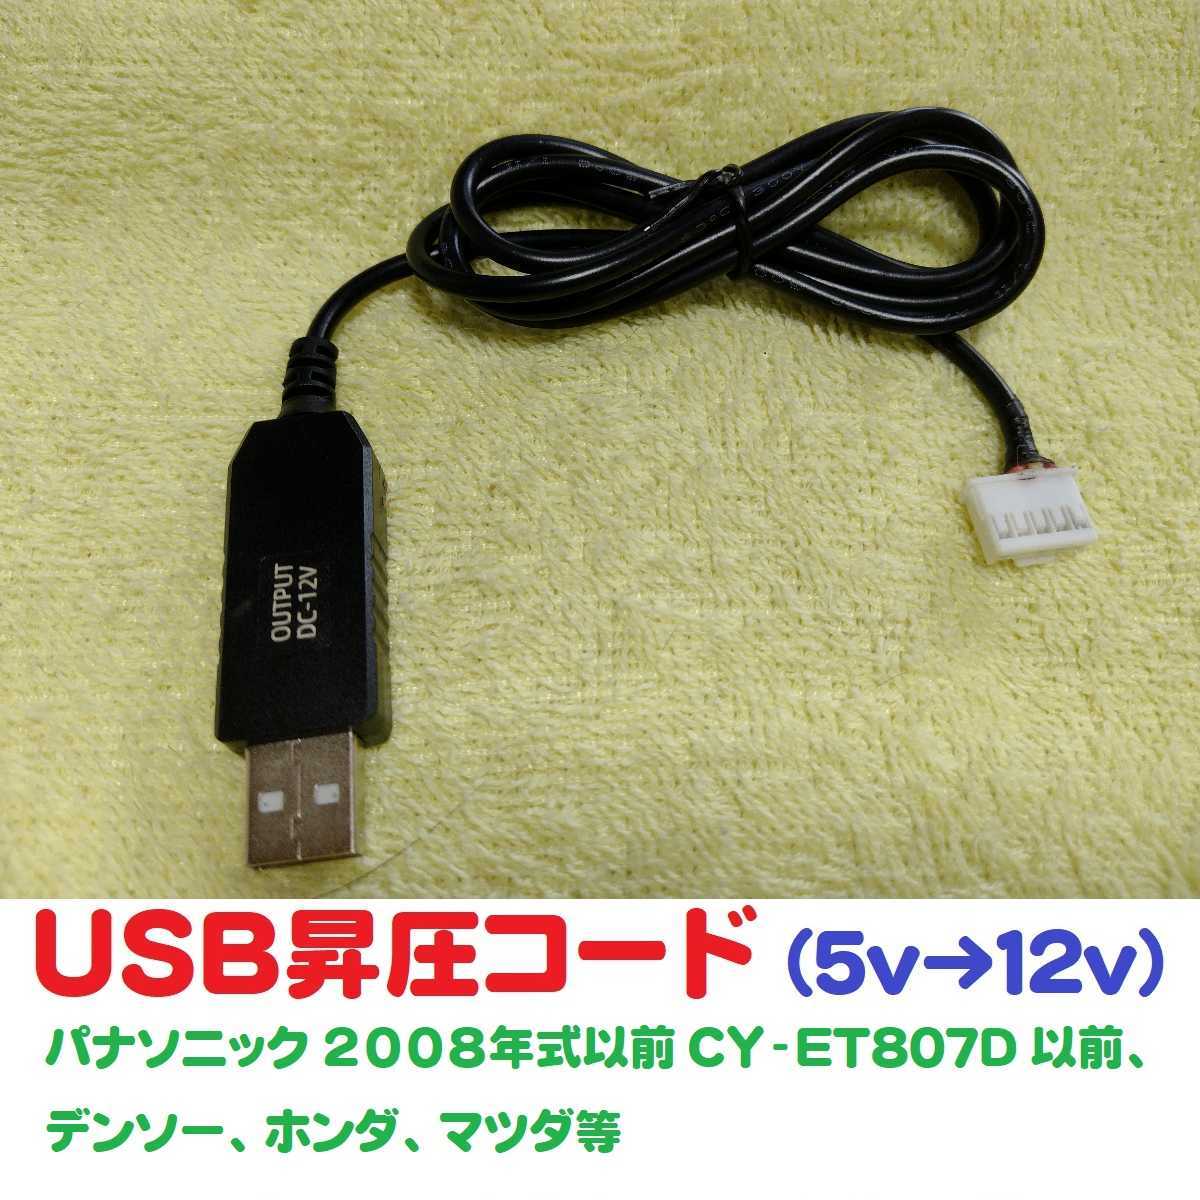 USB昇圧コード 5V-12V パナソニック ETC車載機用（2008年式以前.CY-ET807Dまでに対応）送料無料 ※ USBコード USBケーブル USB昇圧ケーブル_画像1